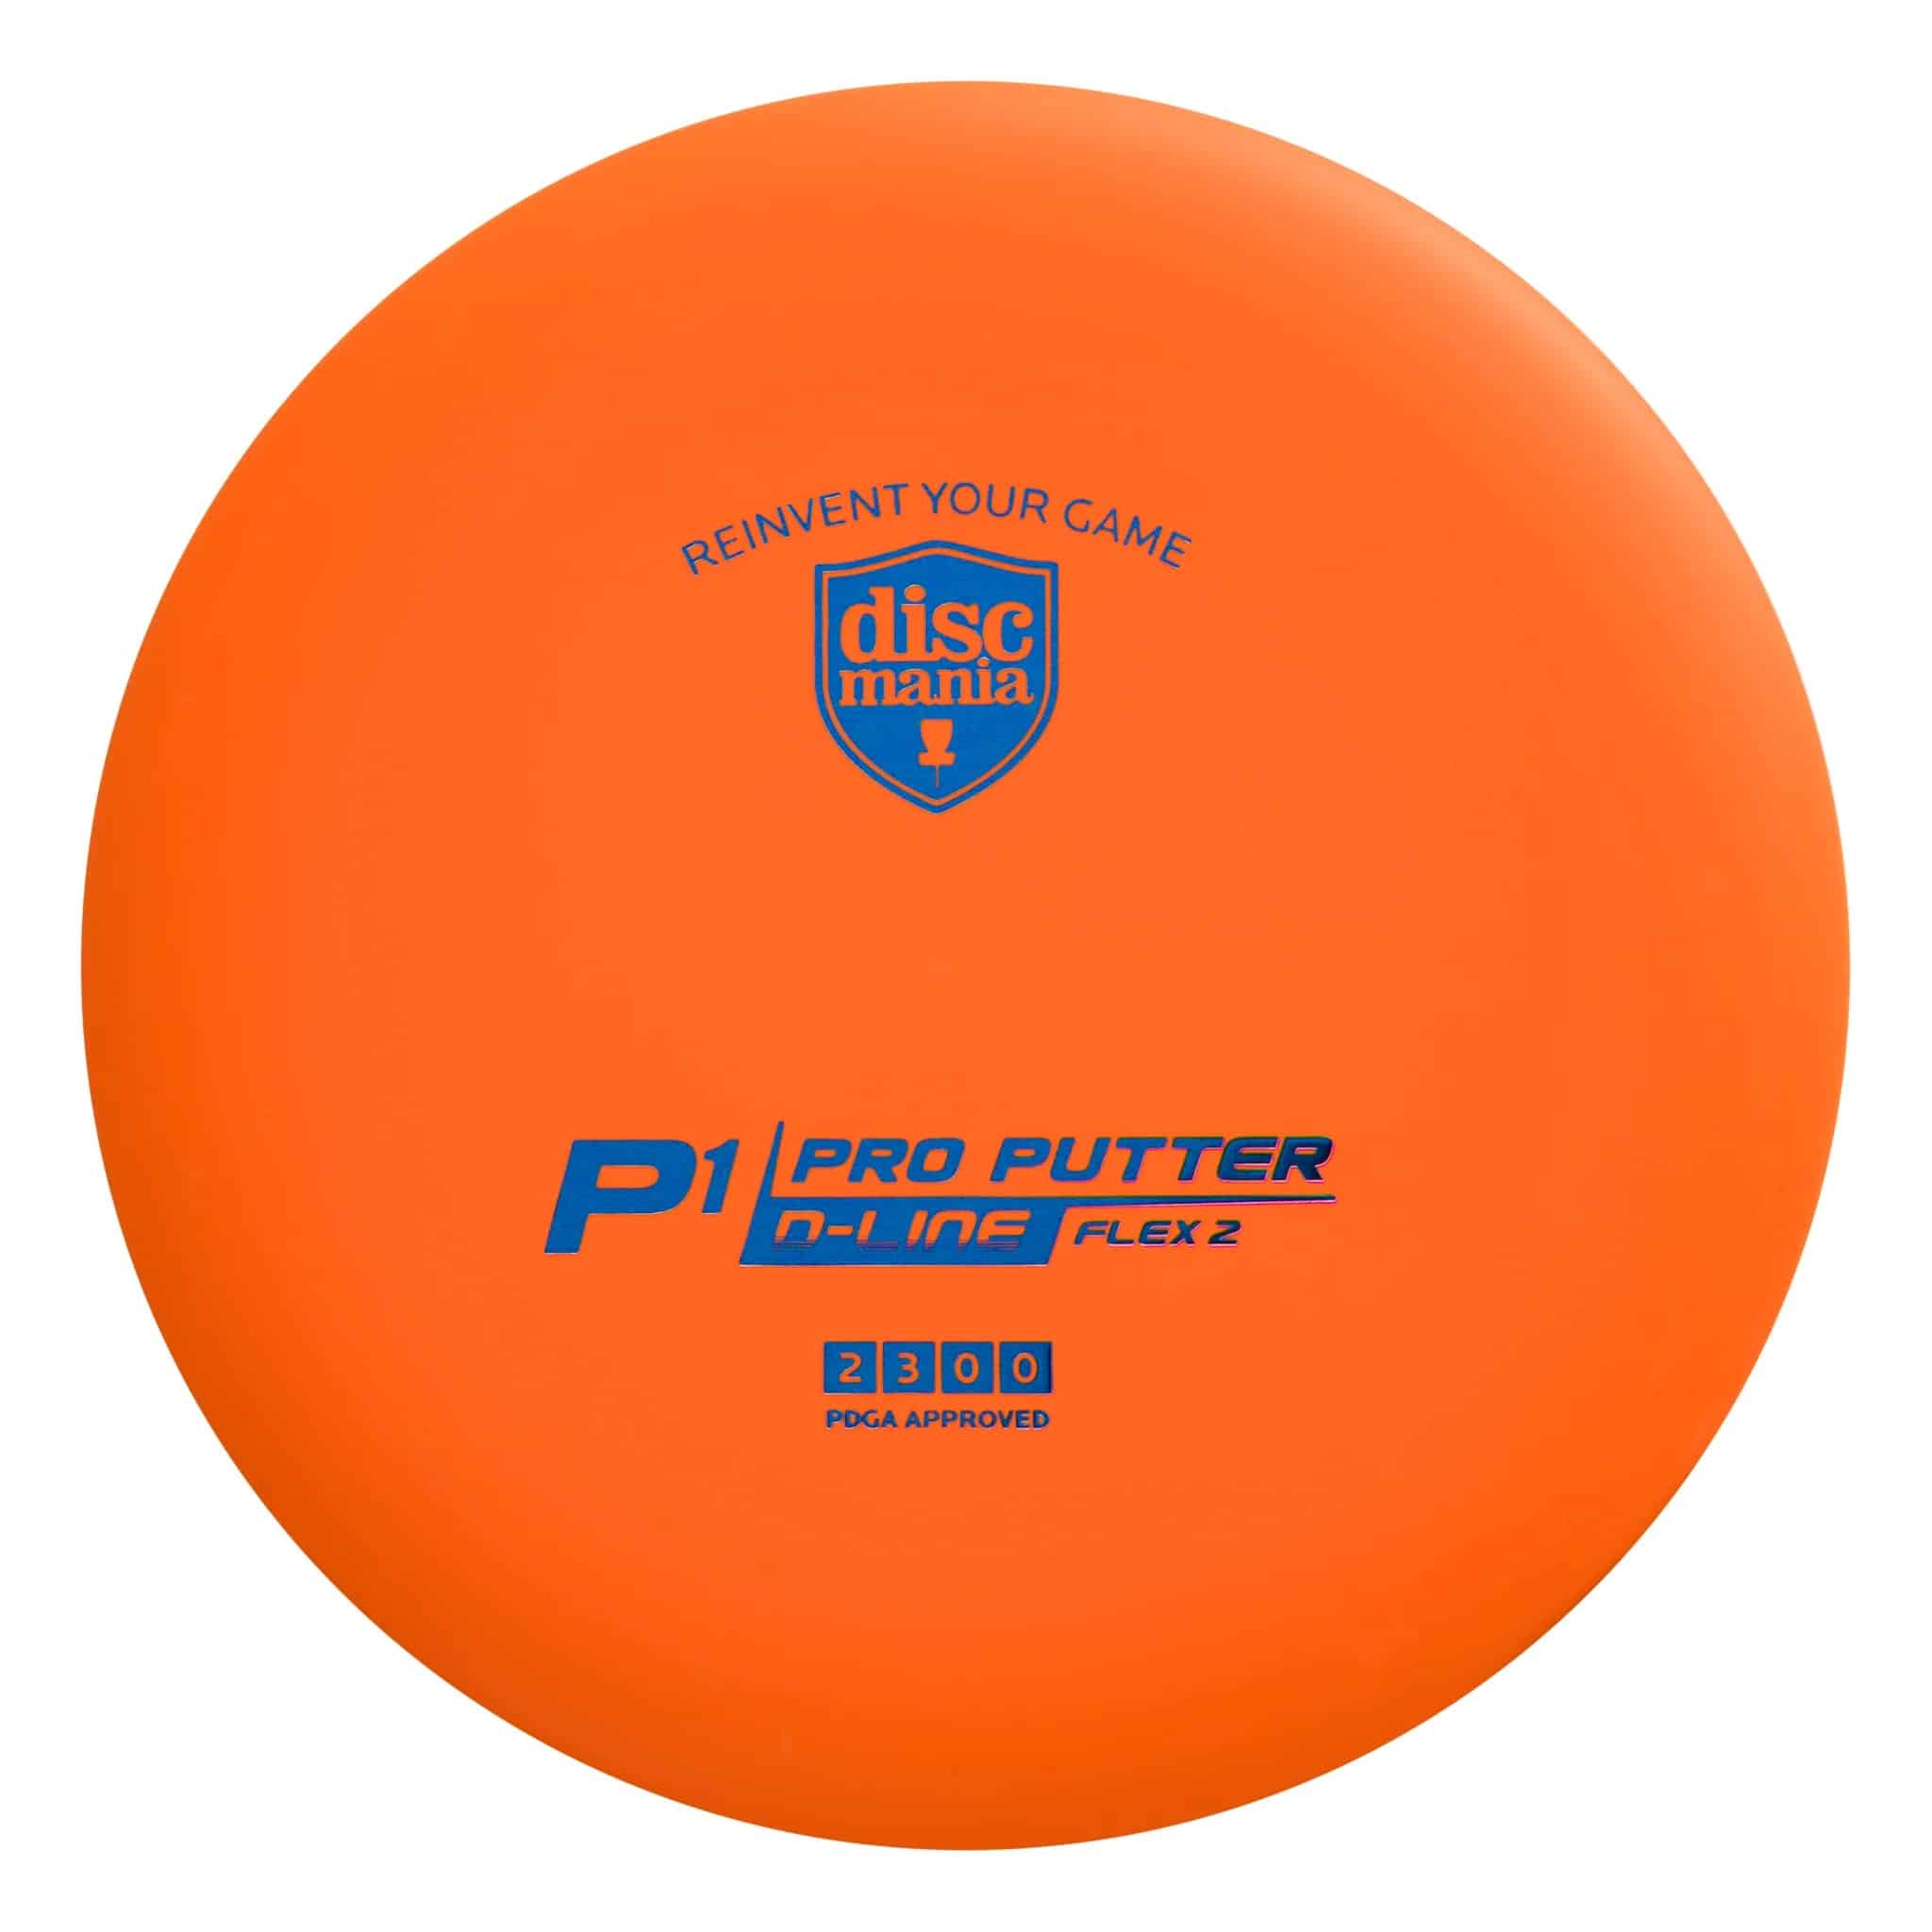 Discmania D-line P1 Flex 2 orange par3 disku golfs